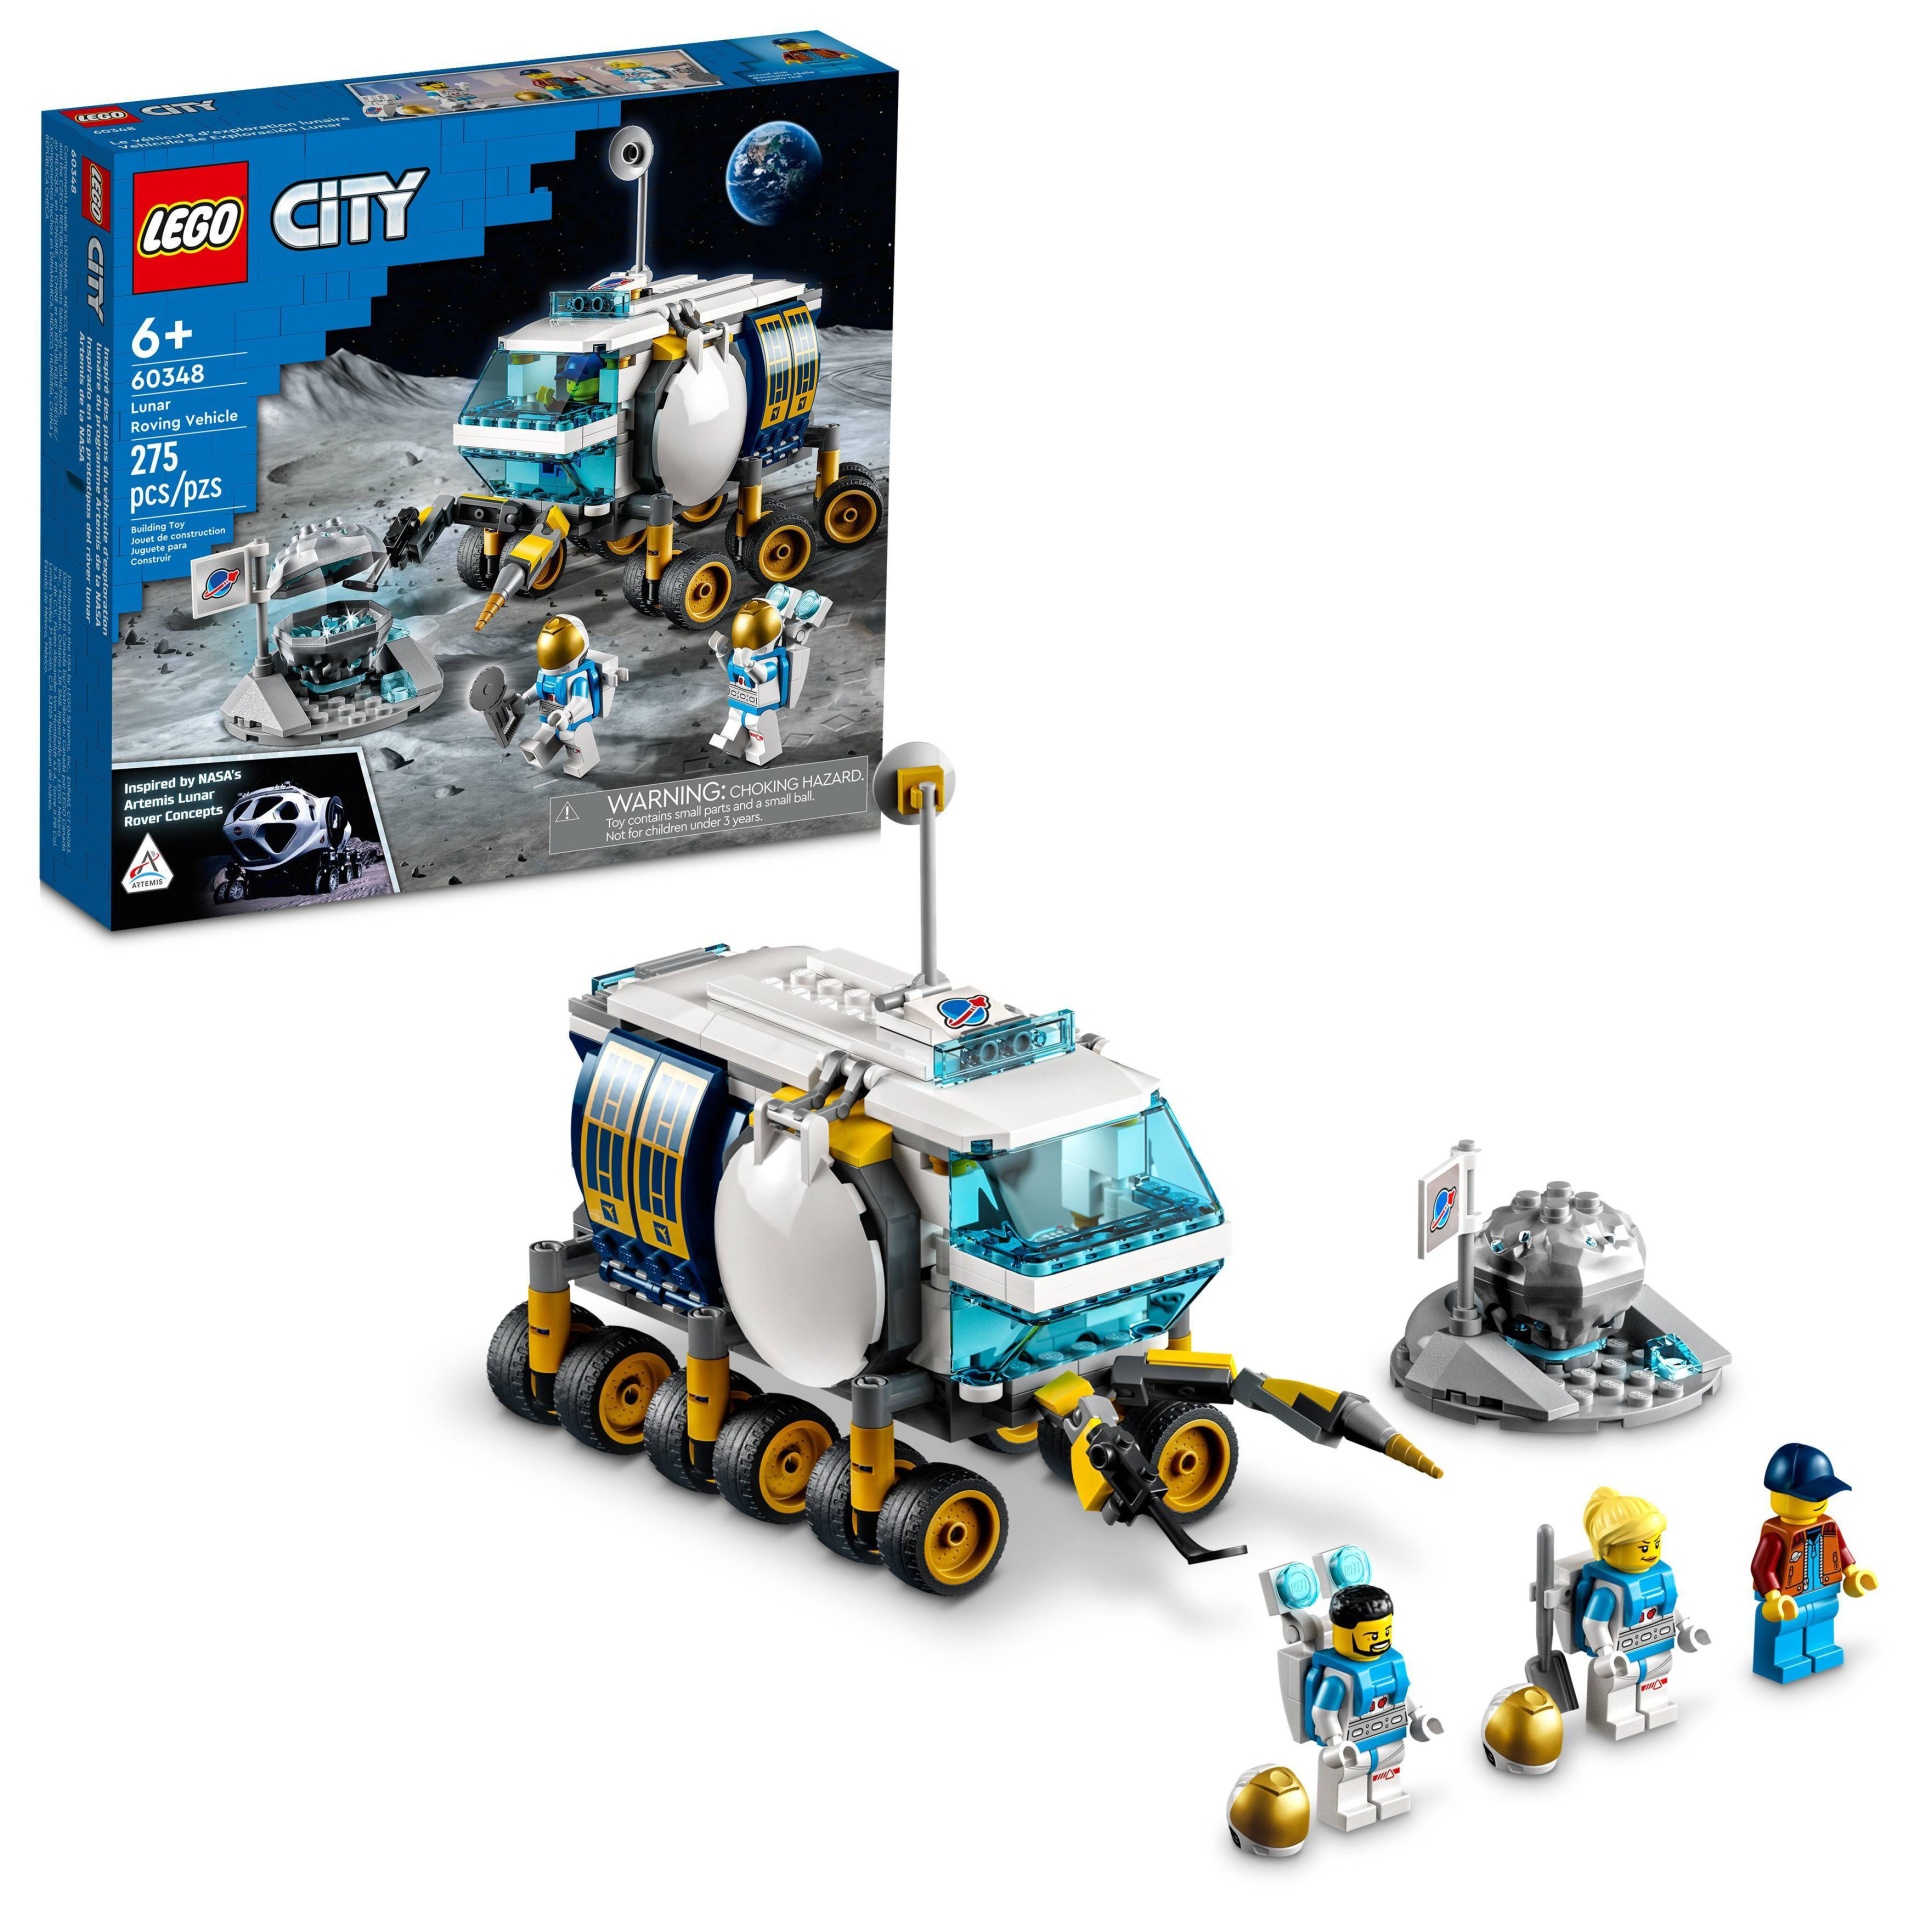 slide 1 of 6, LEGO City Lunar Roving Vehicle 60348 Building Kit, 1 ct